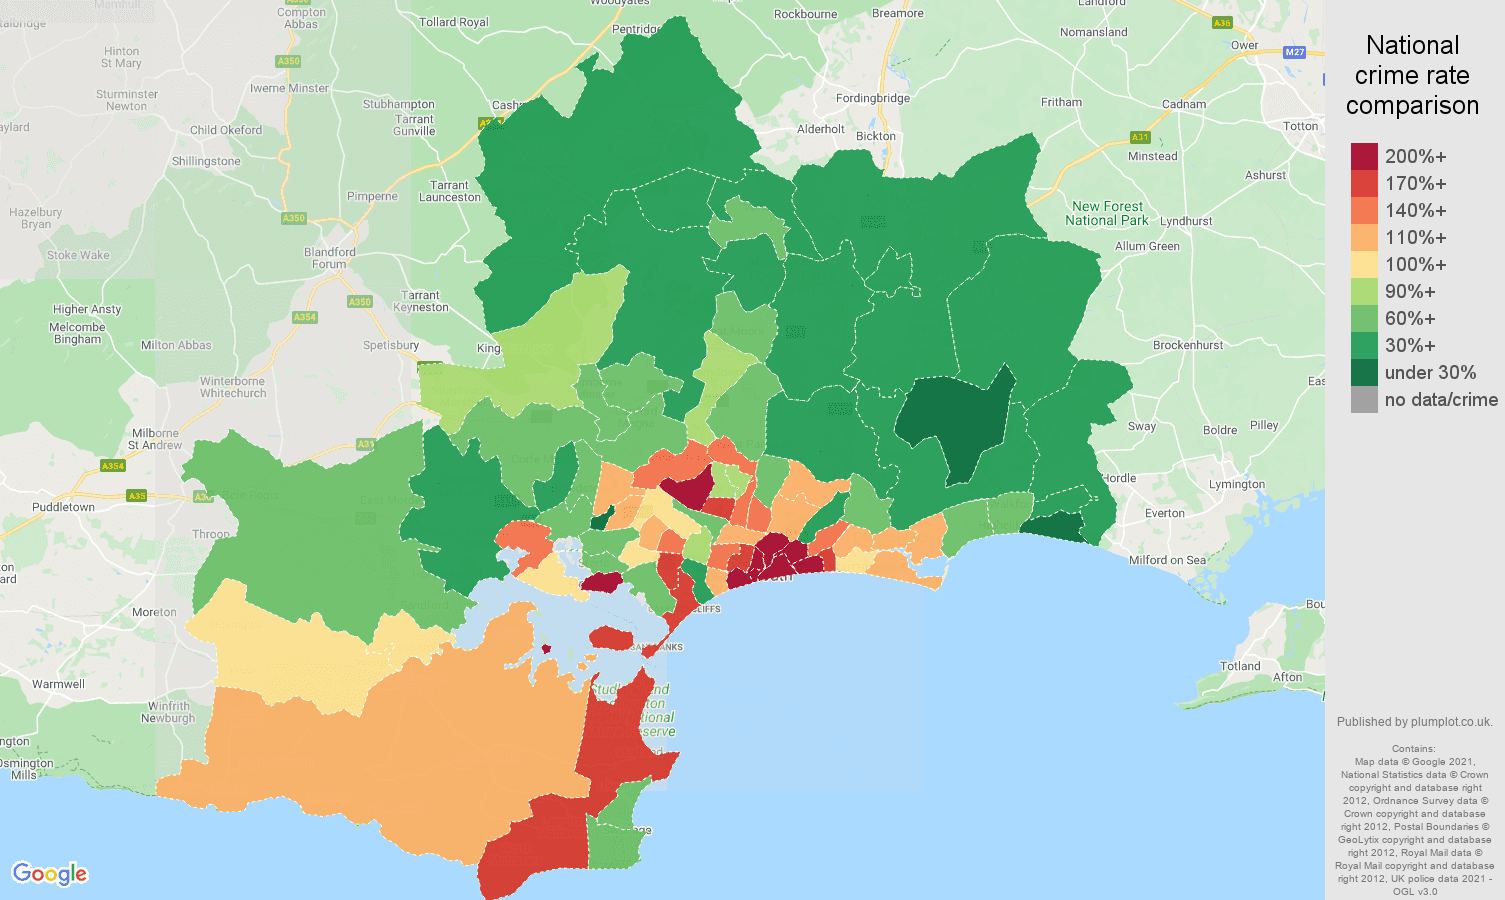 Bournemouth antisocial behaviour crime rate comparison map